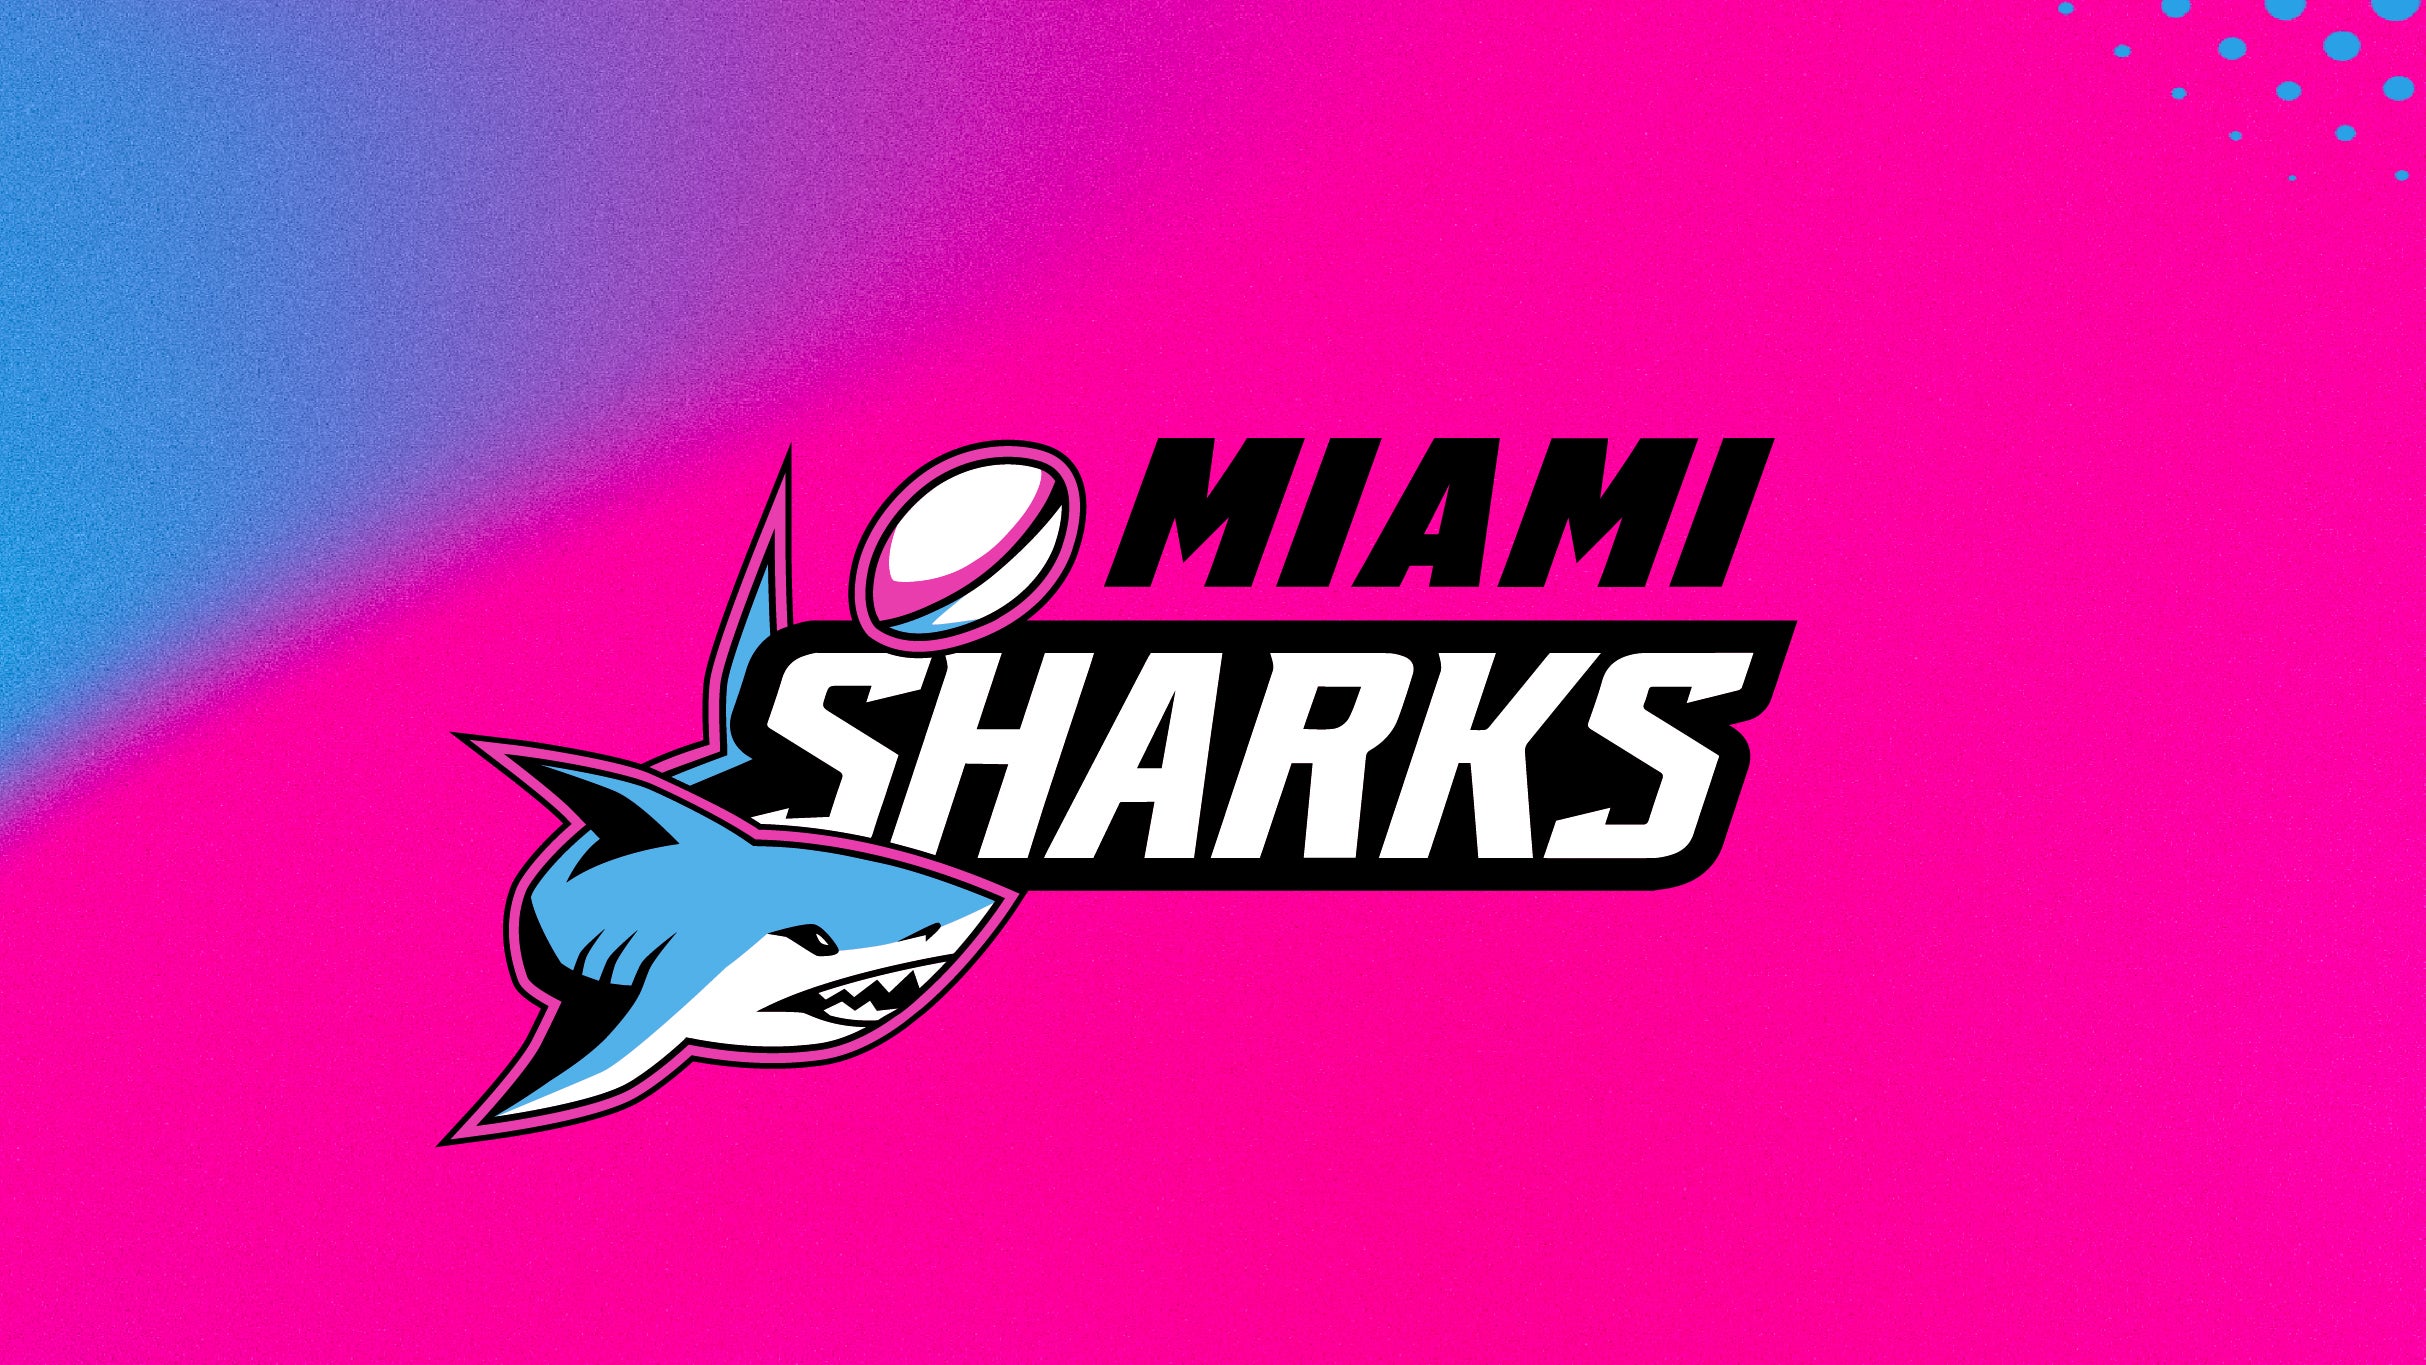 Miami Sharks vs New England Free Jacks presale passwords